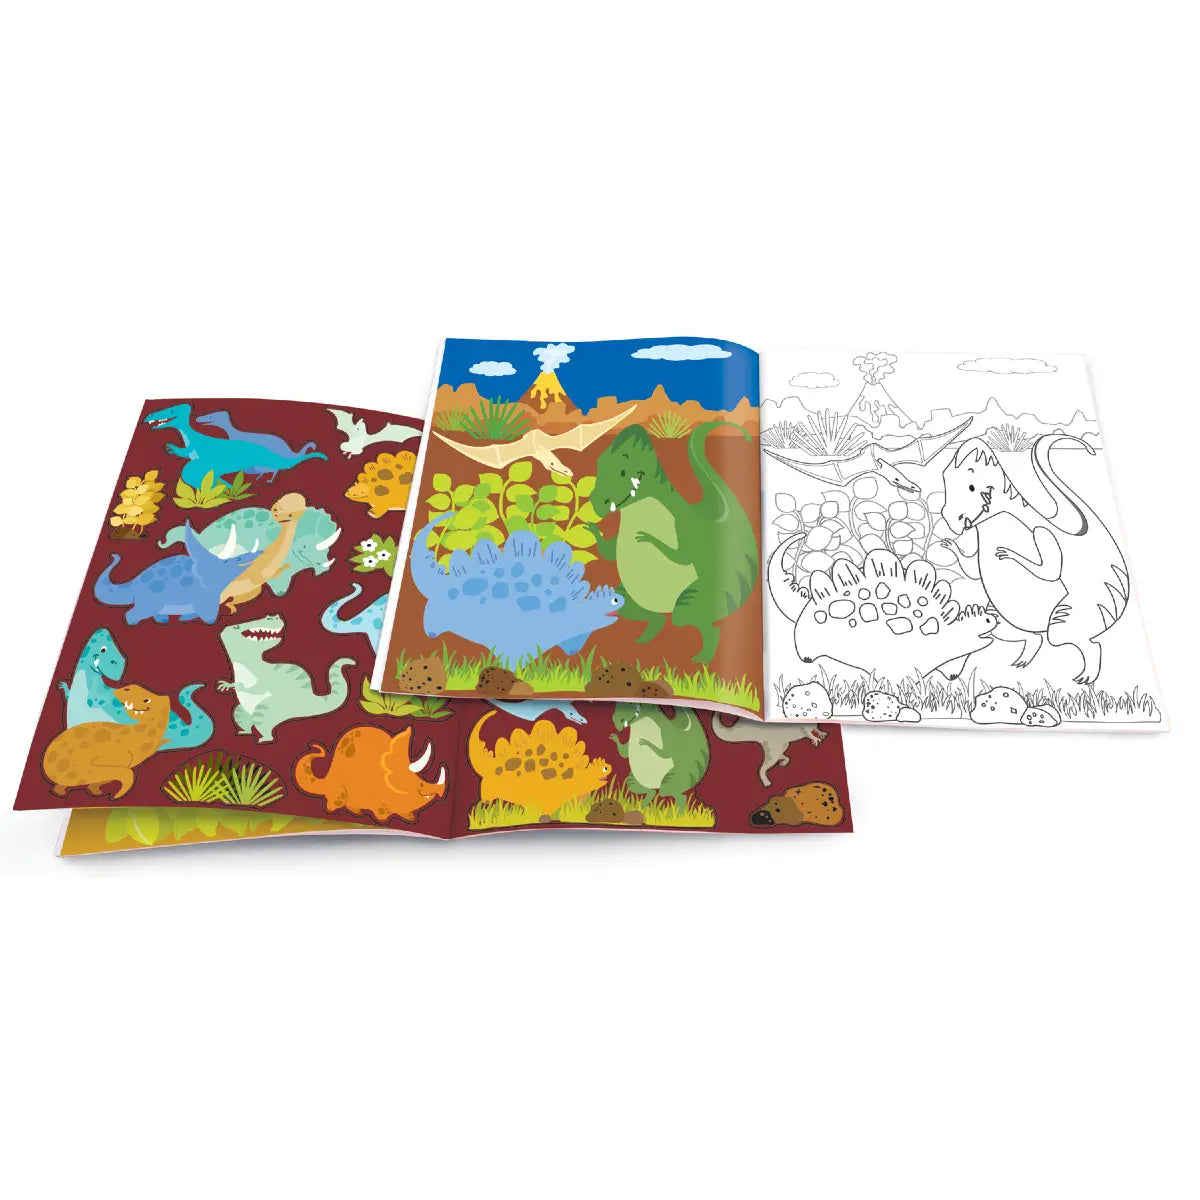 Dinosaur World Dry Erase Coloring Book